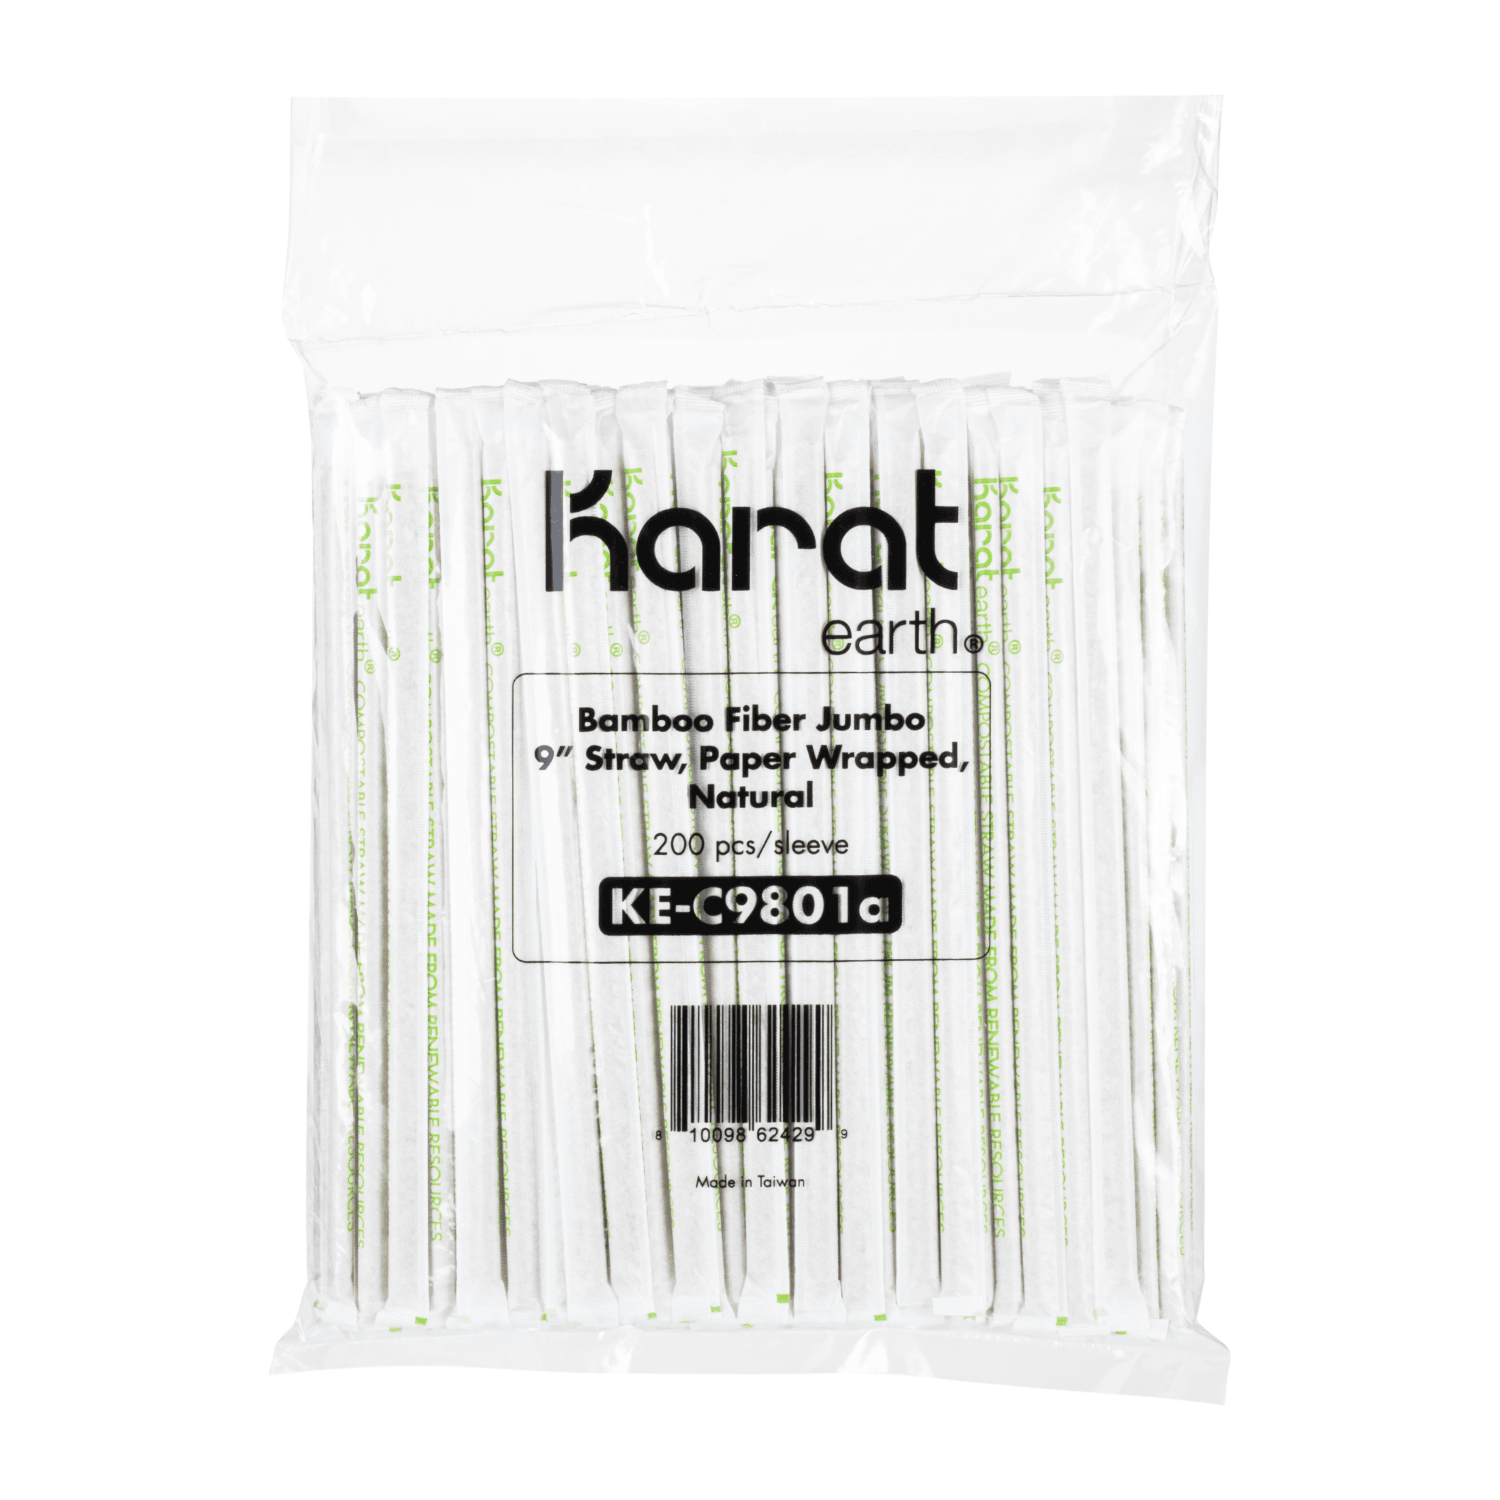 Karat Earth 9" Flat Cut Bamboo Fiber Jumbo Straws (6mm) Paper Wrapped, Natural - Bag of 200 pcs